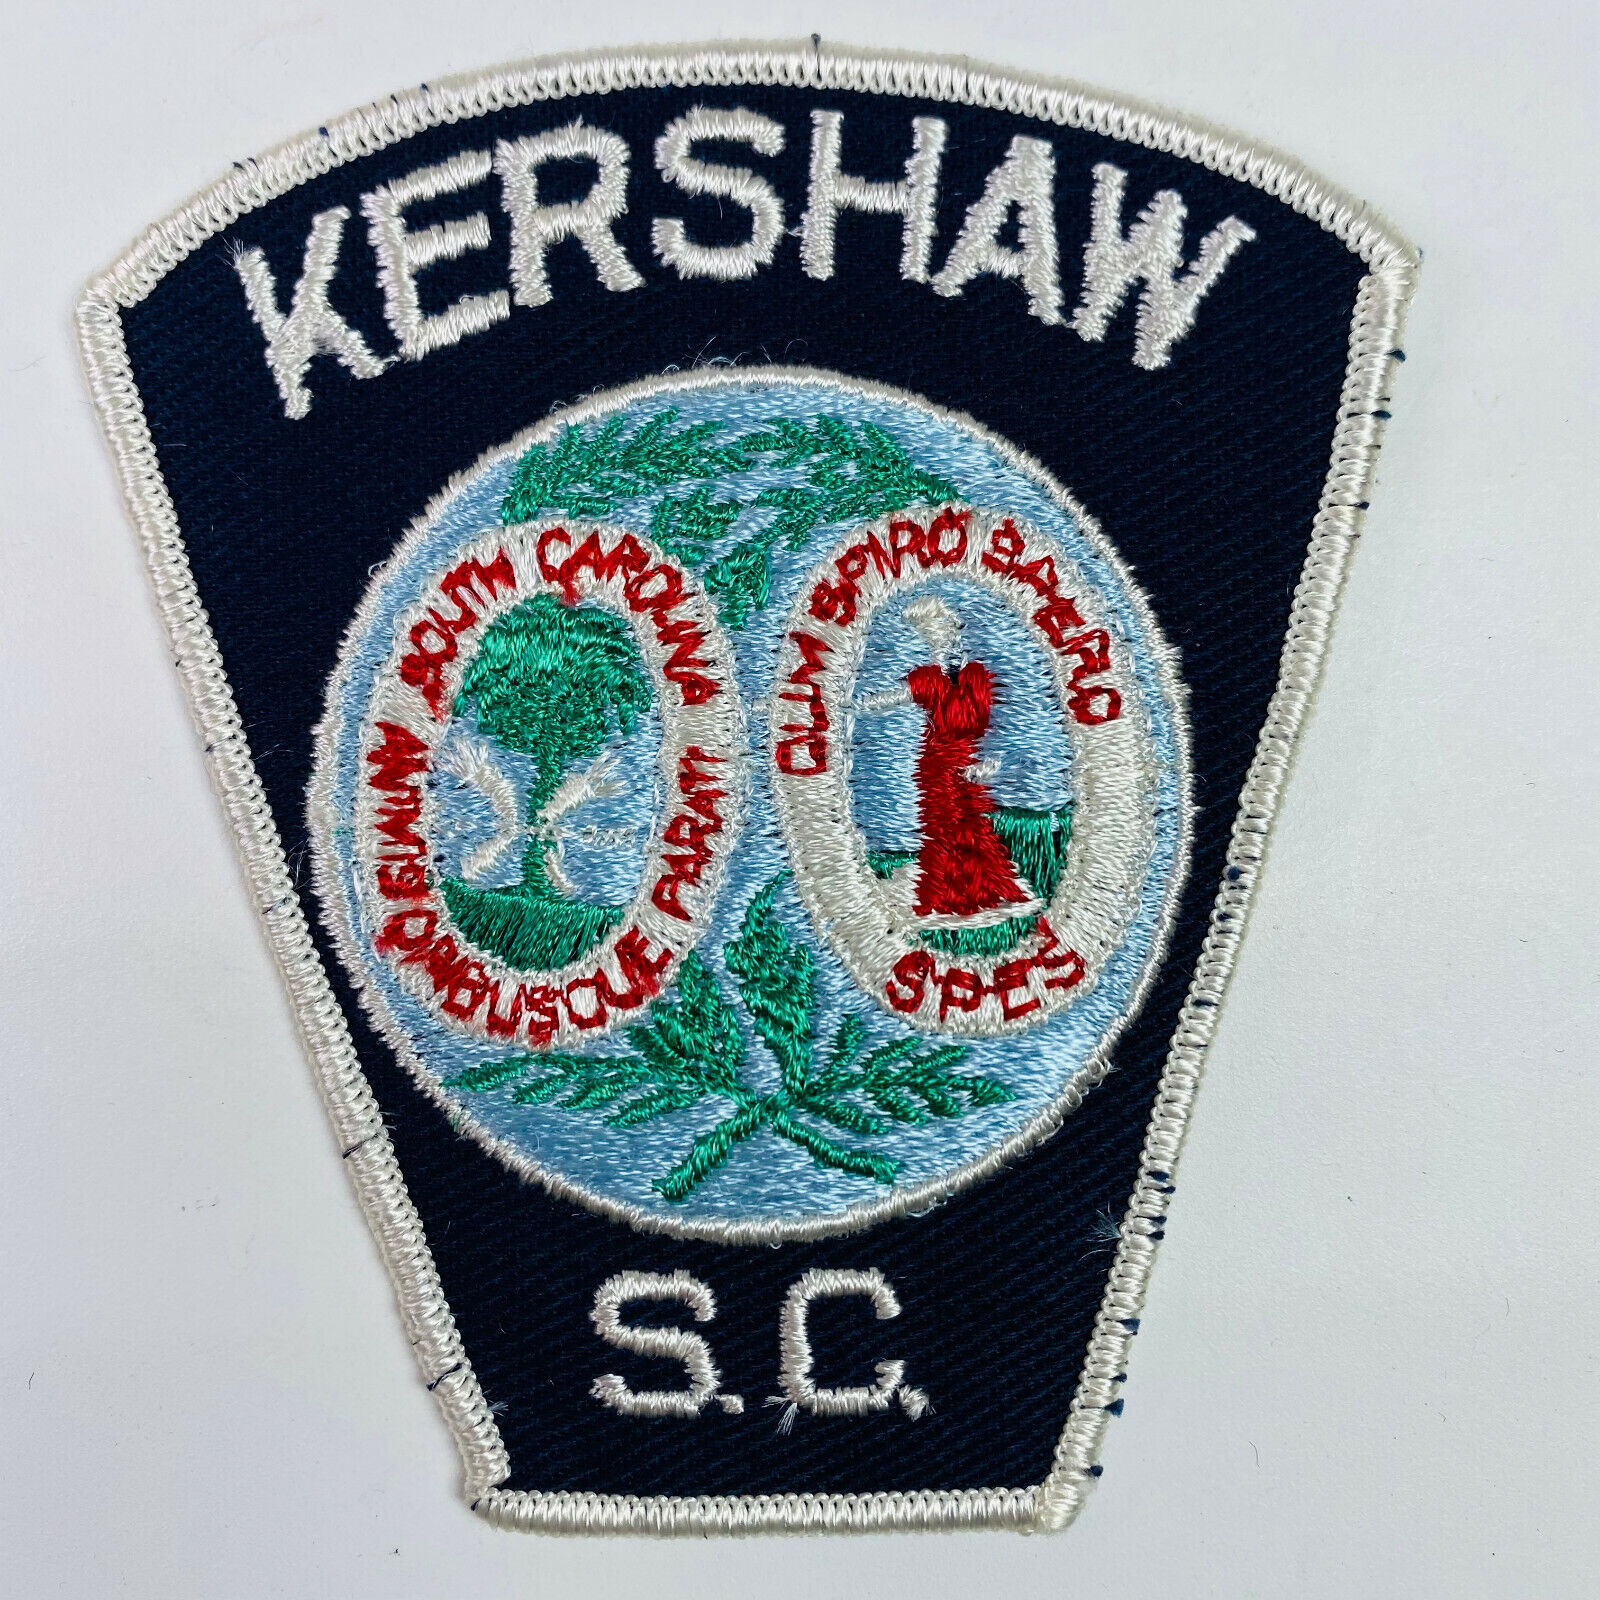 Kershaw South Carolina SC Patch A7